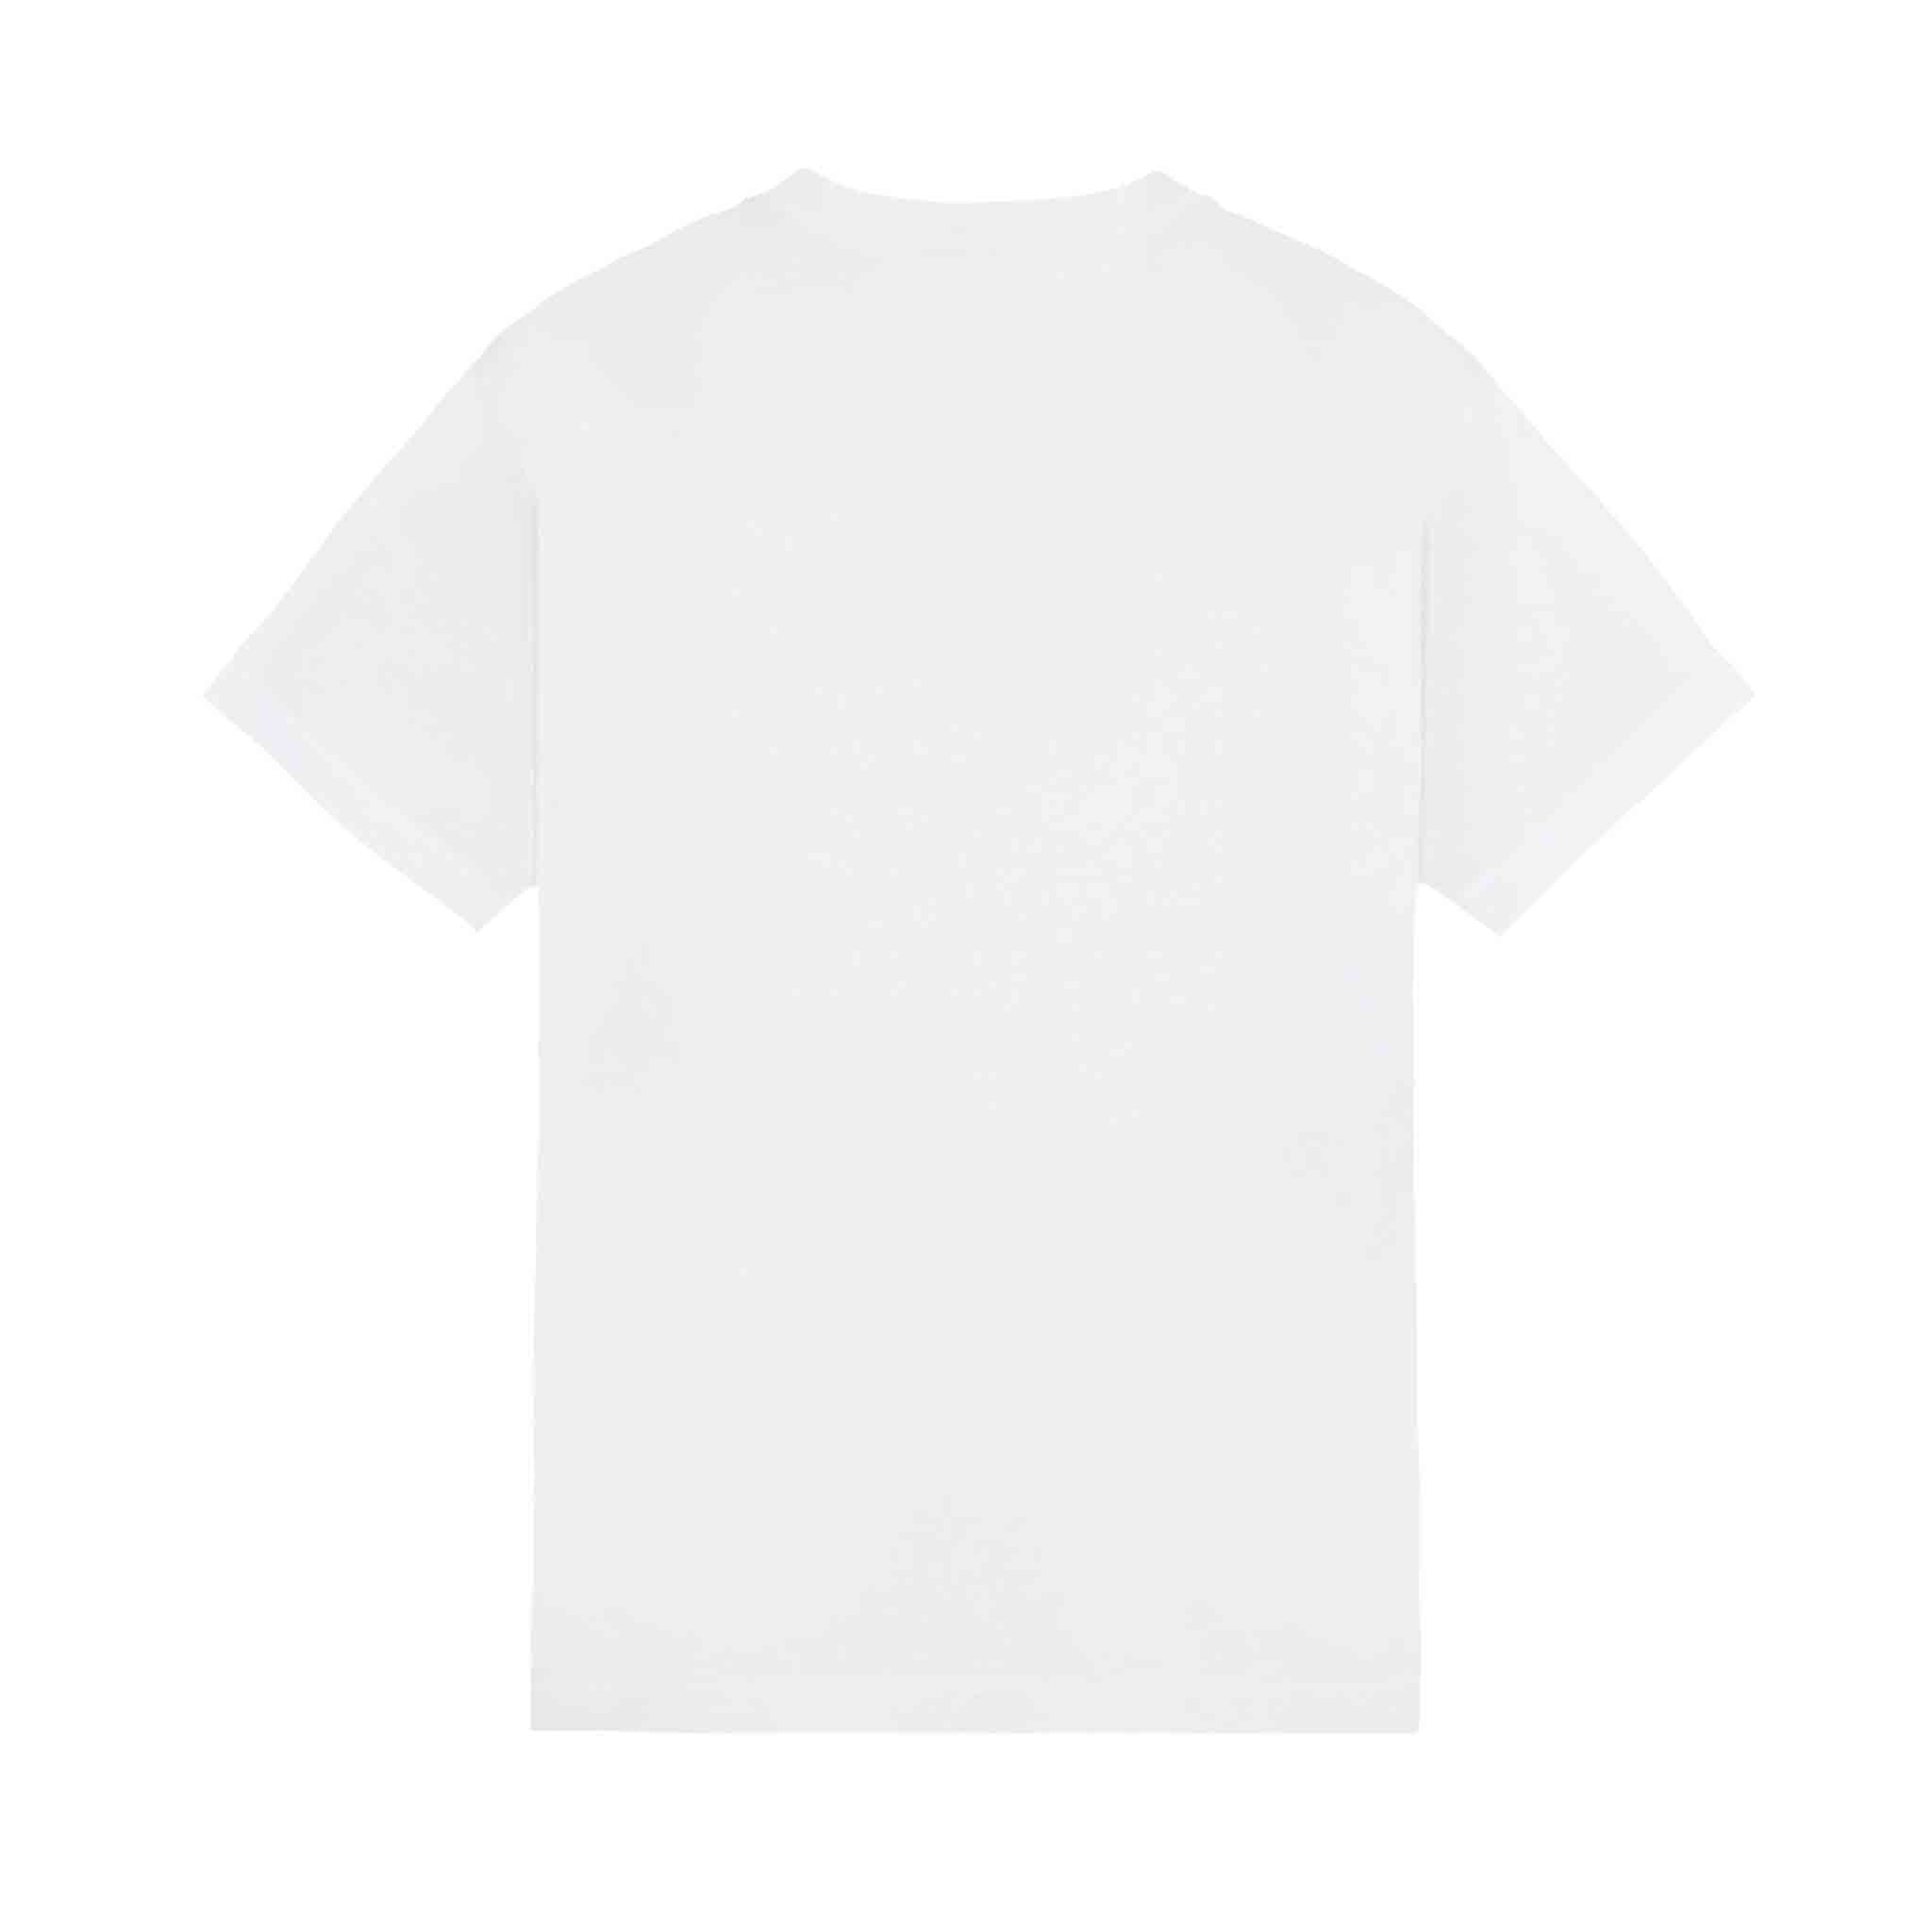 Stone Island Compass Logo T-Shirt in White